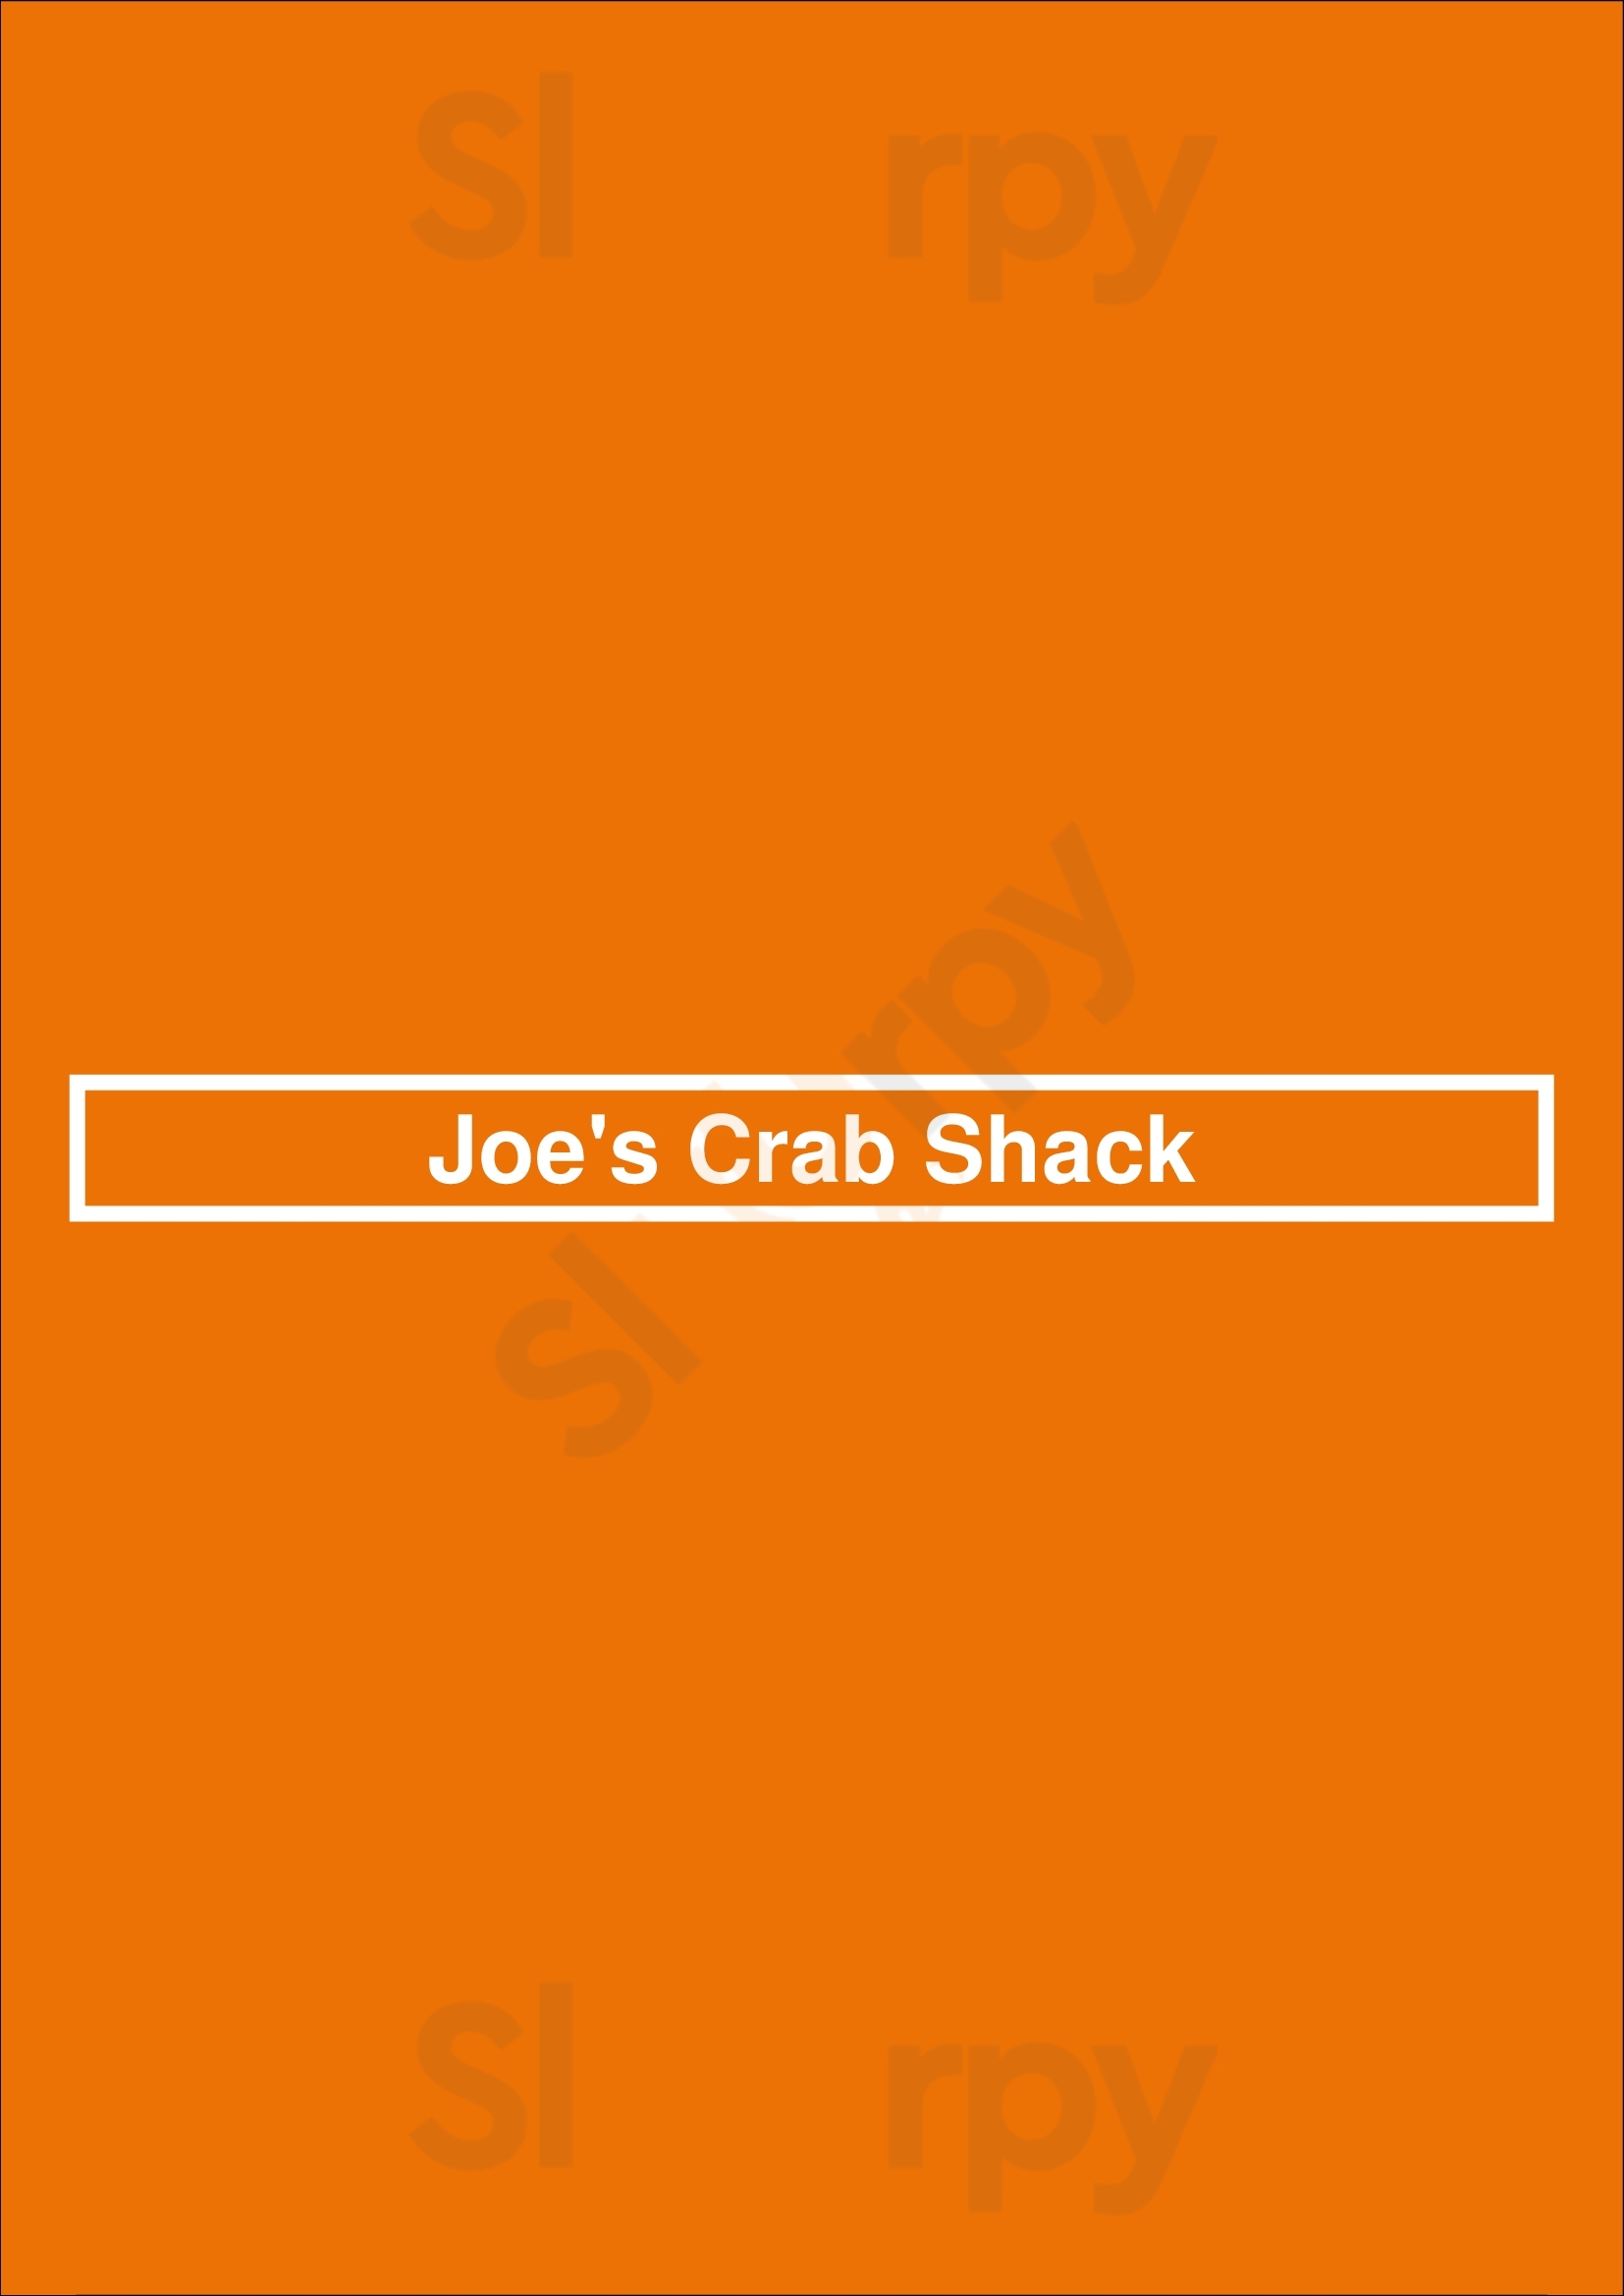 Joe's Crab Shack Sacramento Menu - 1